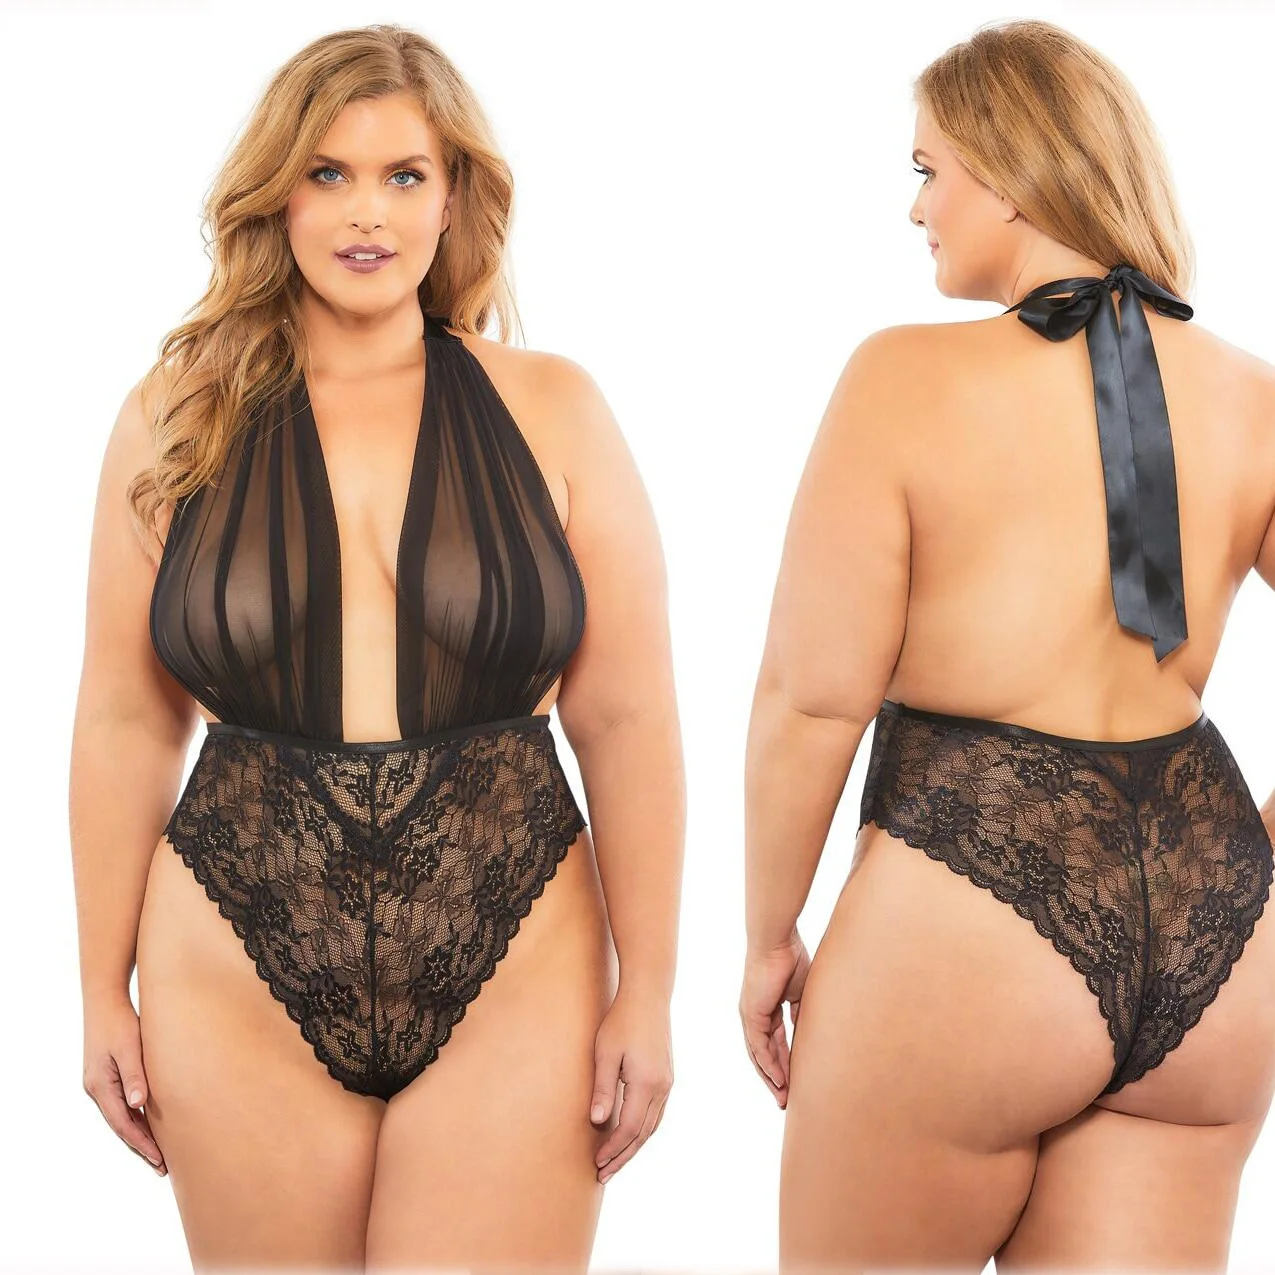 

Sexy erotic plus transparent lingerie super size large women's neckline lace up conjoined mesh perspective underwear, Black